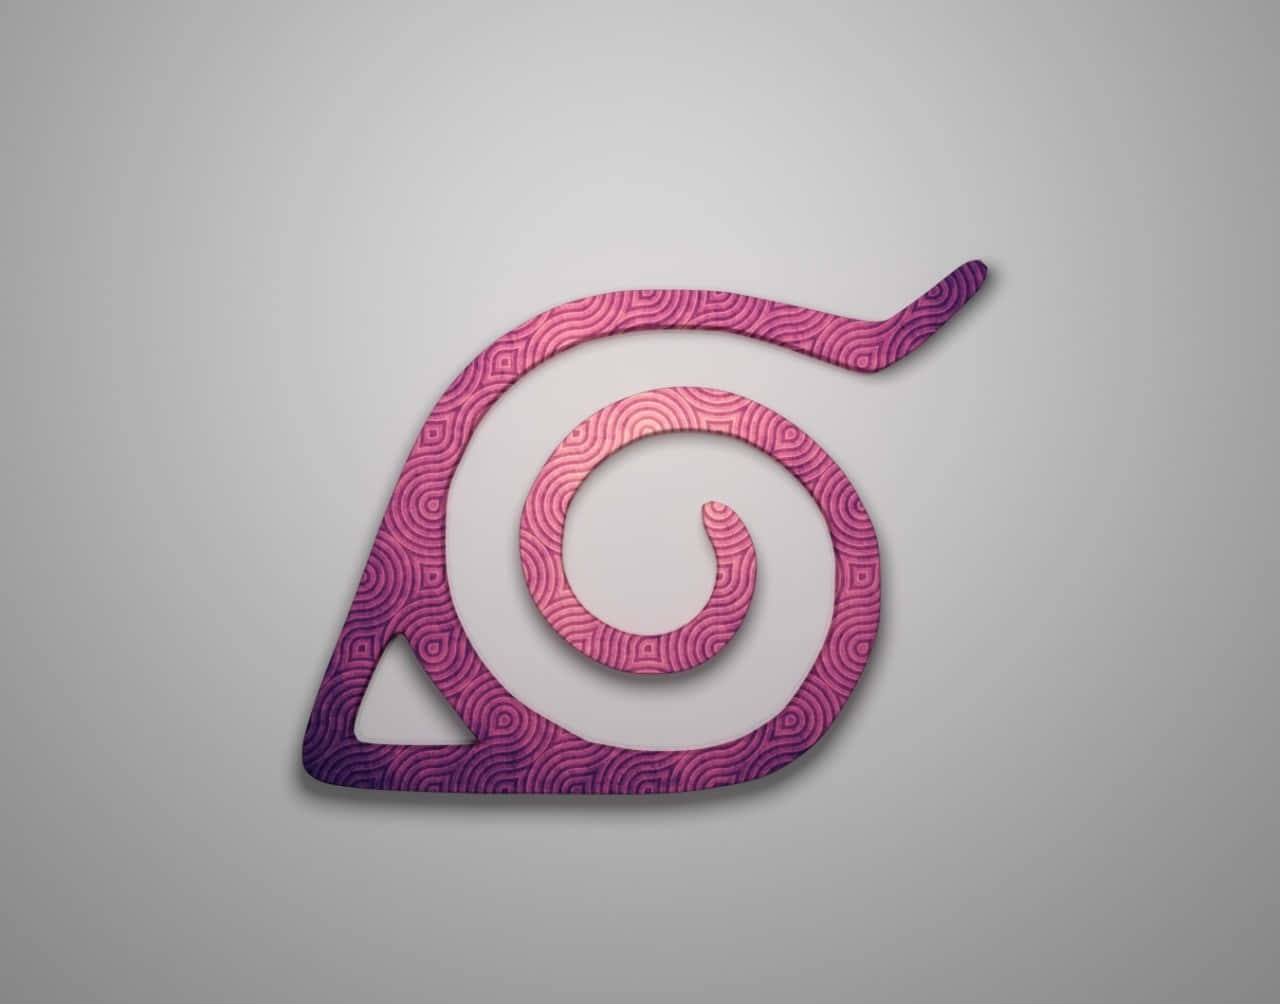 A Purple Spiral Logo On A Gray Background